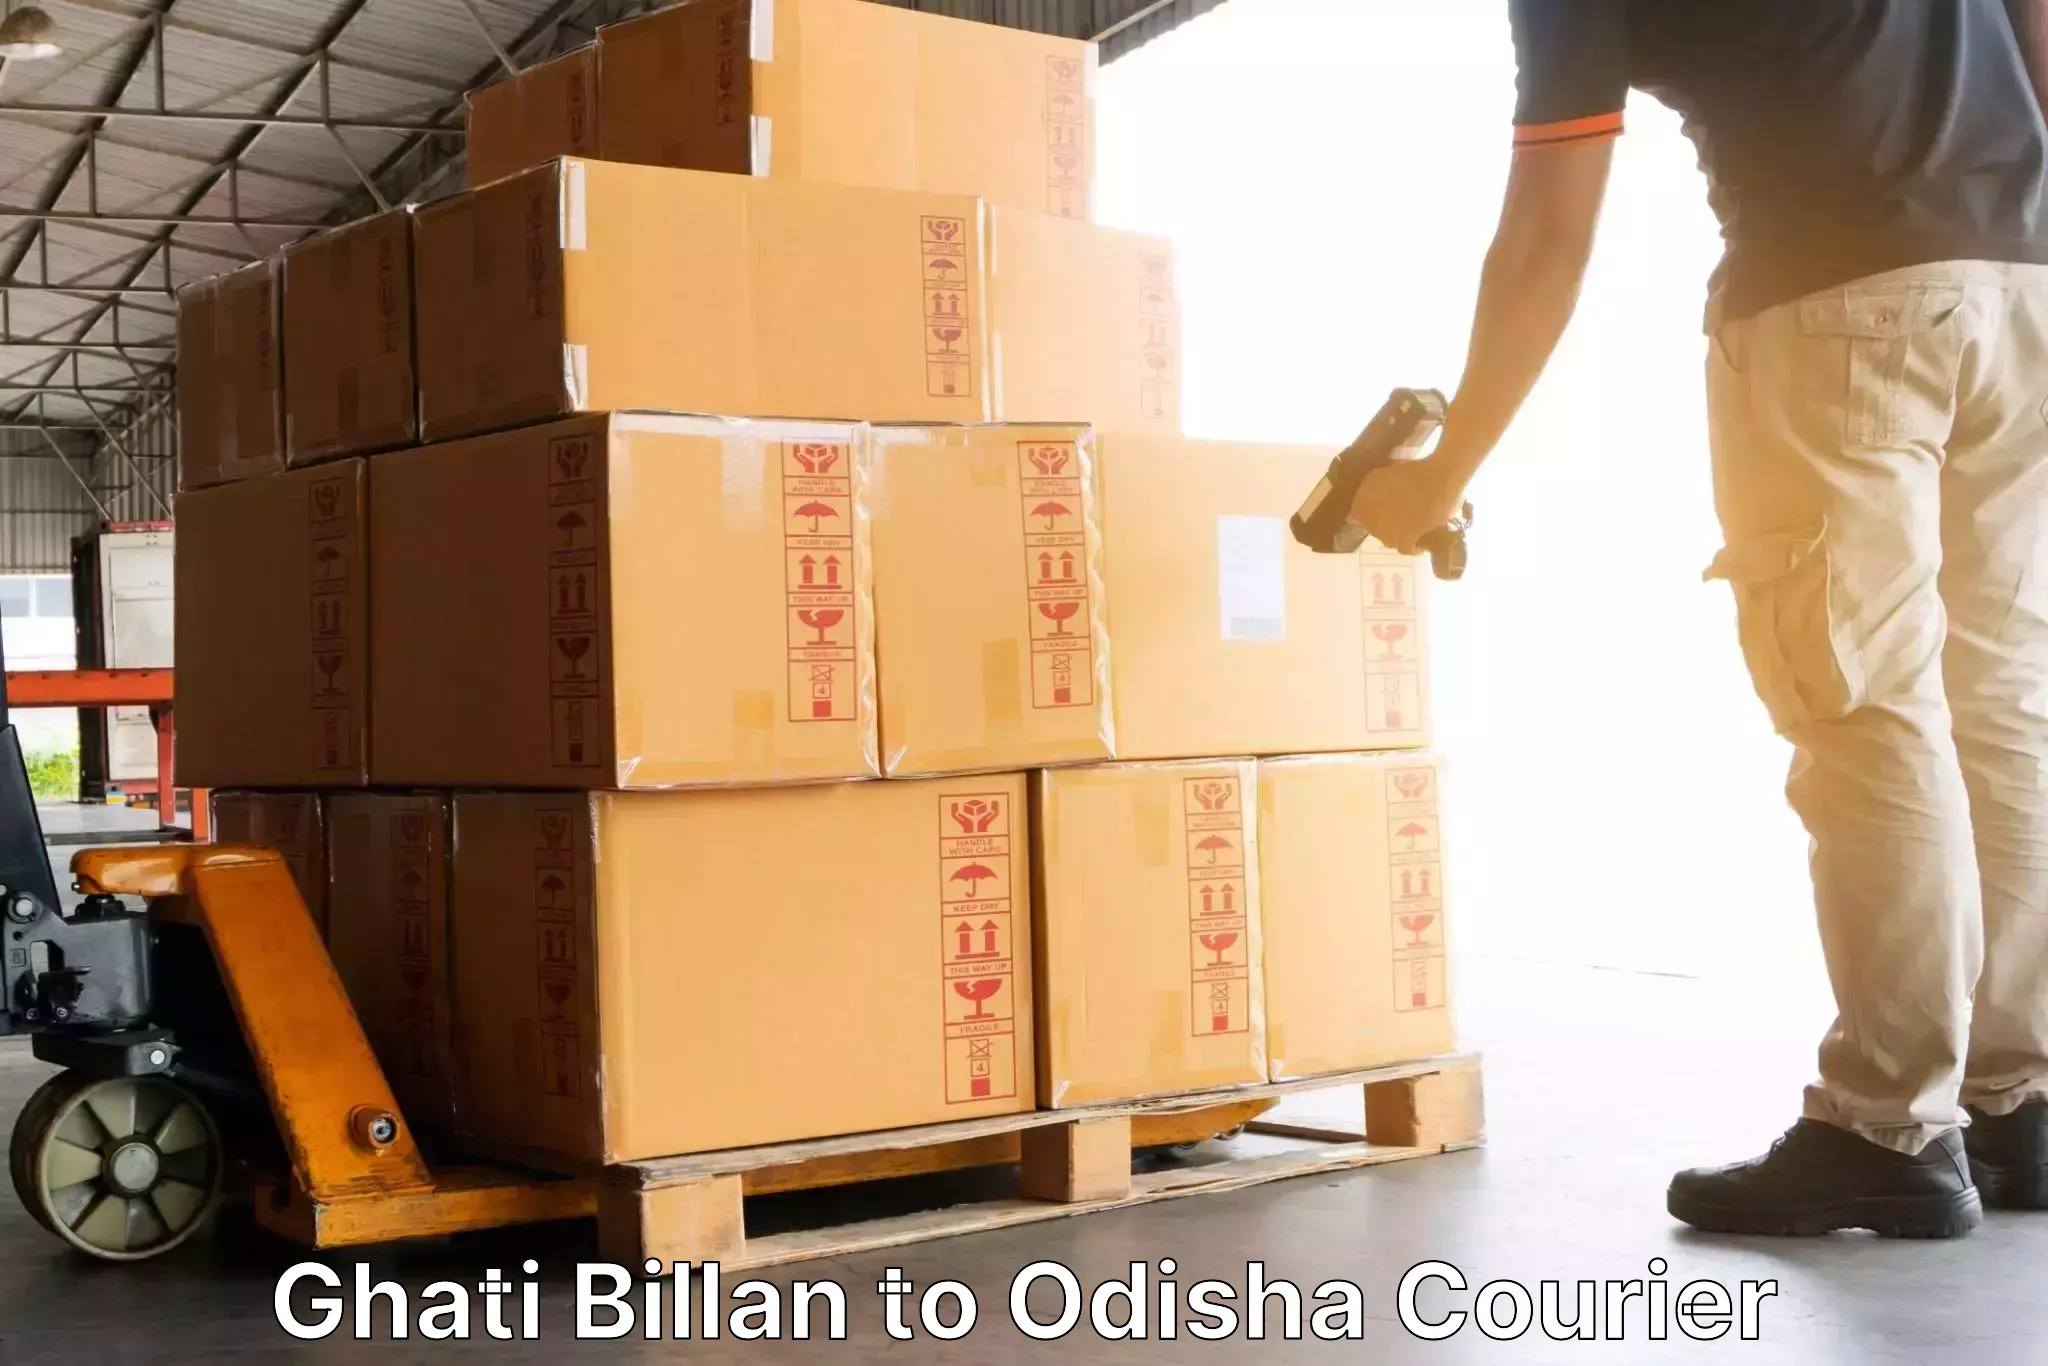 Courier service efficiency Ghati Billan to Raruan